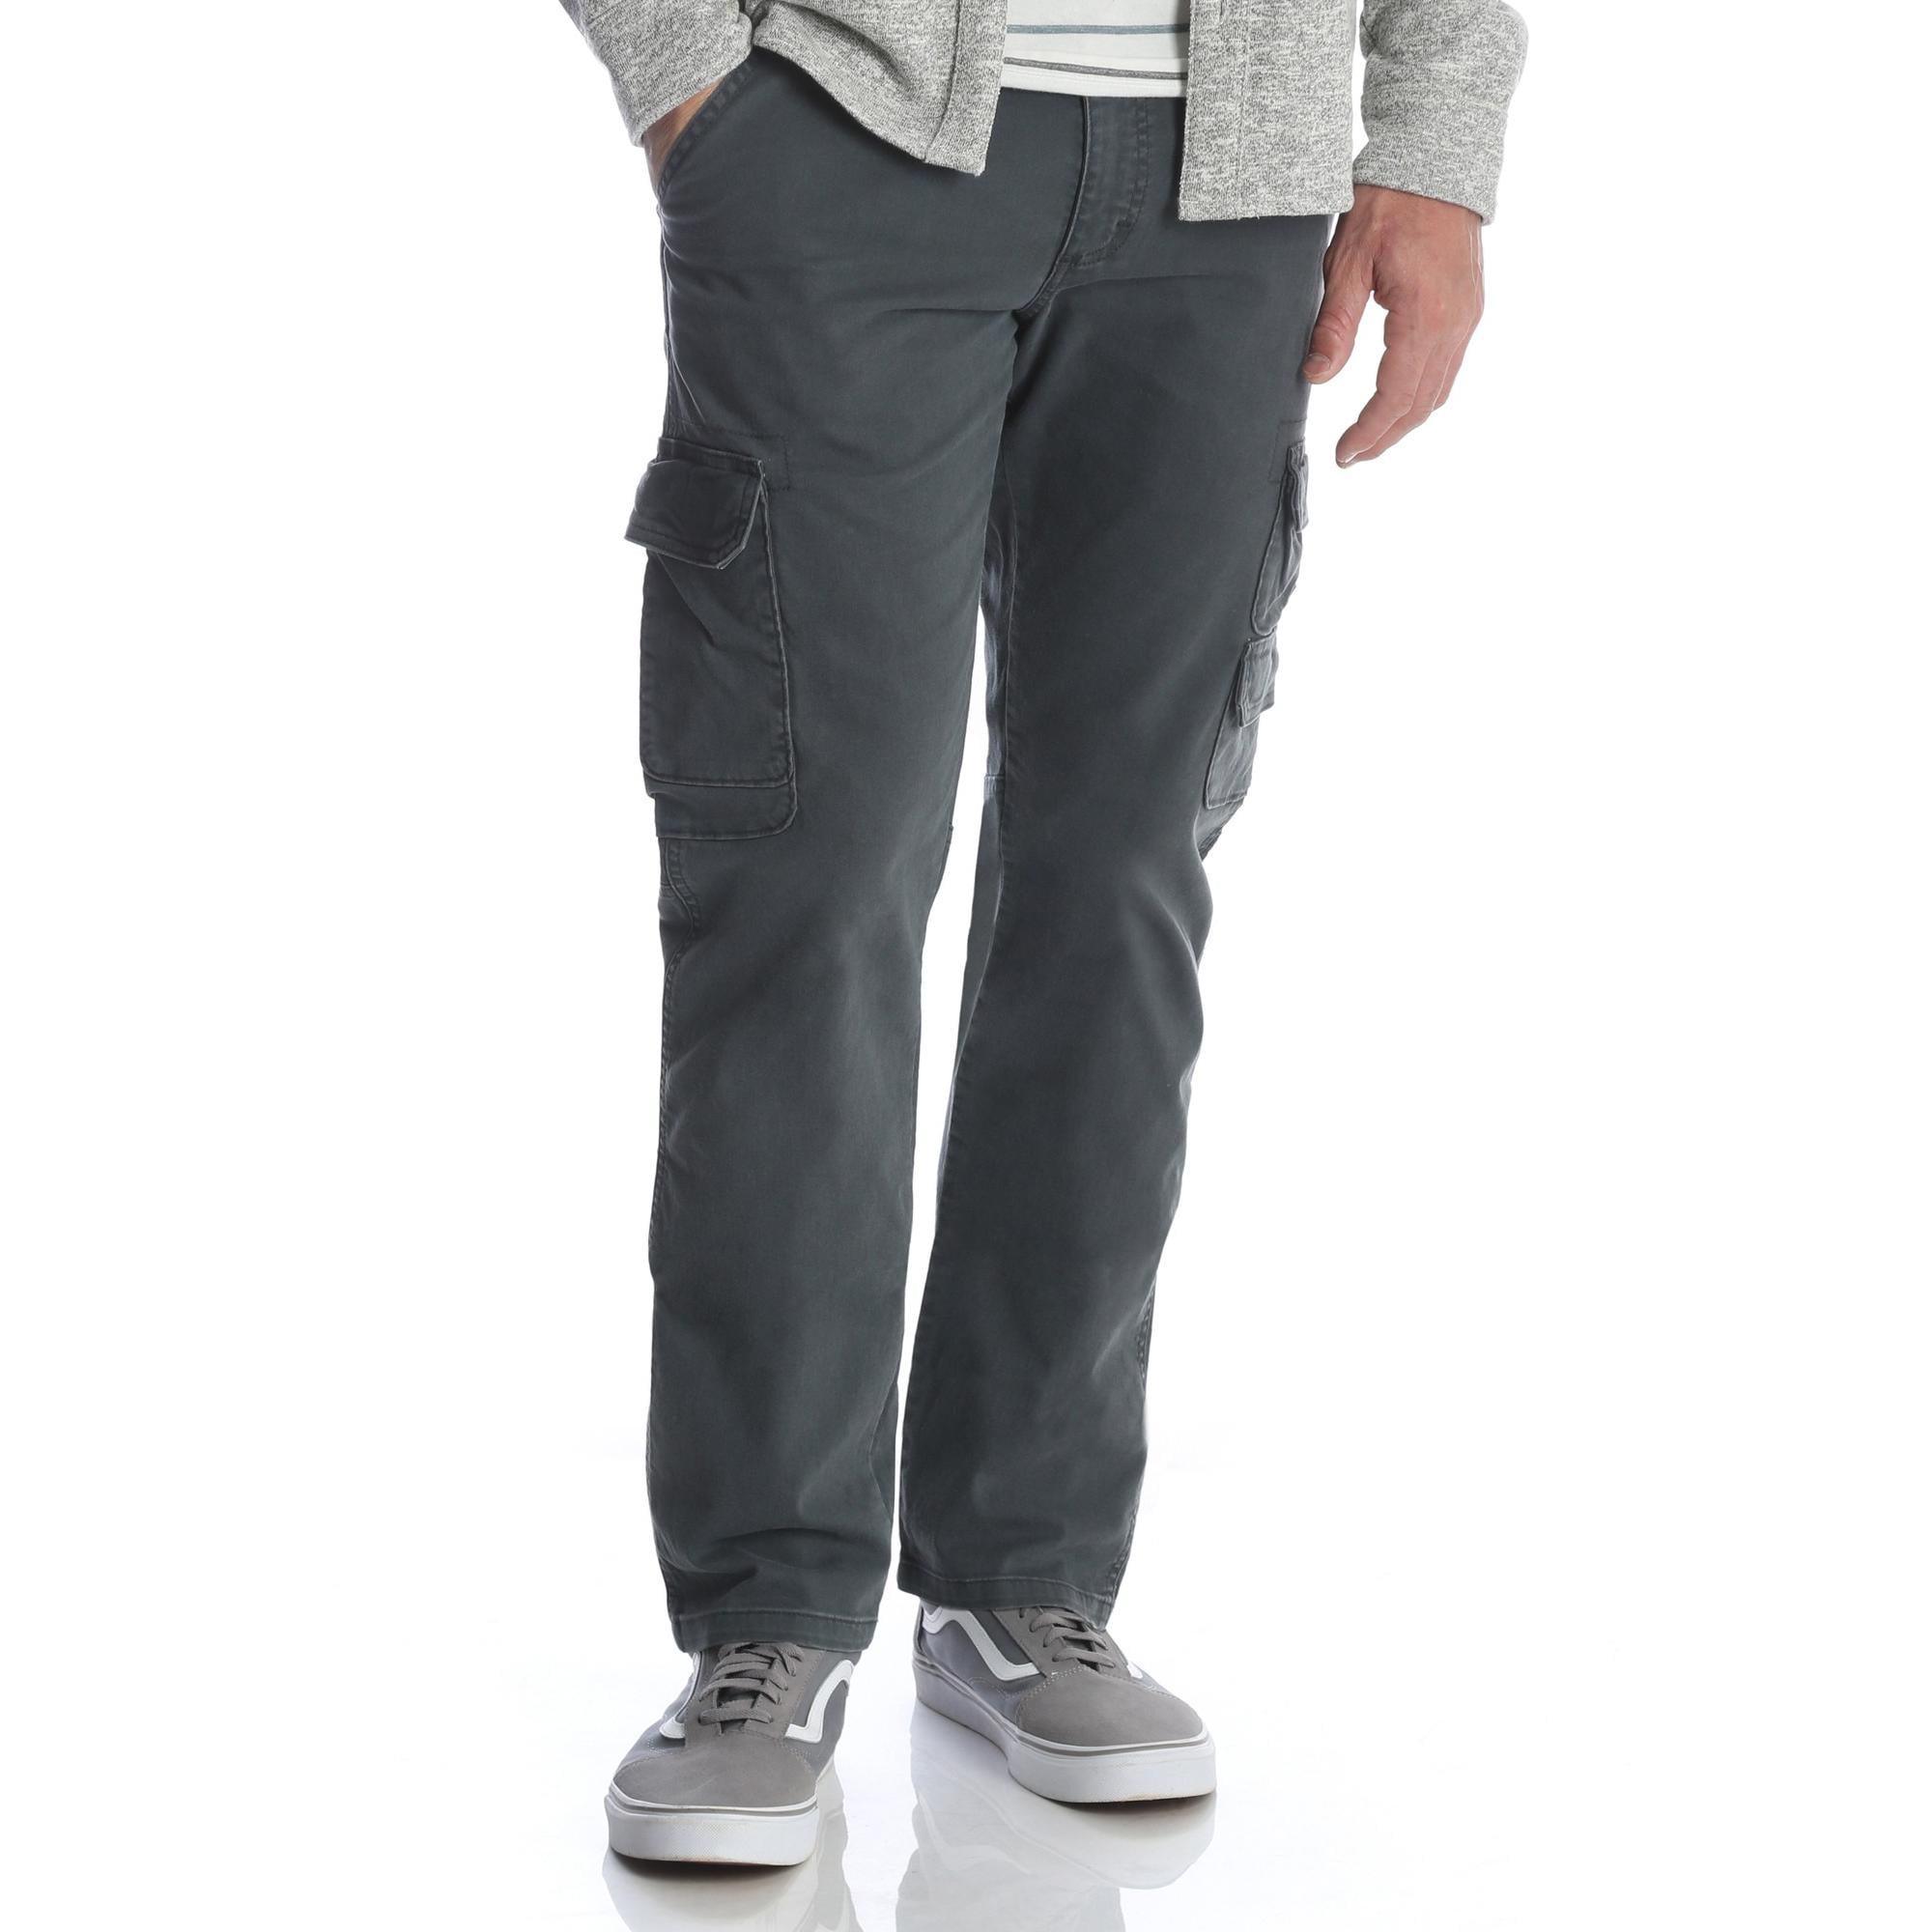 Wrangler Mens Comfort Solution Series Pants. Black. Size 36x30 | eBay